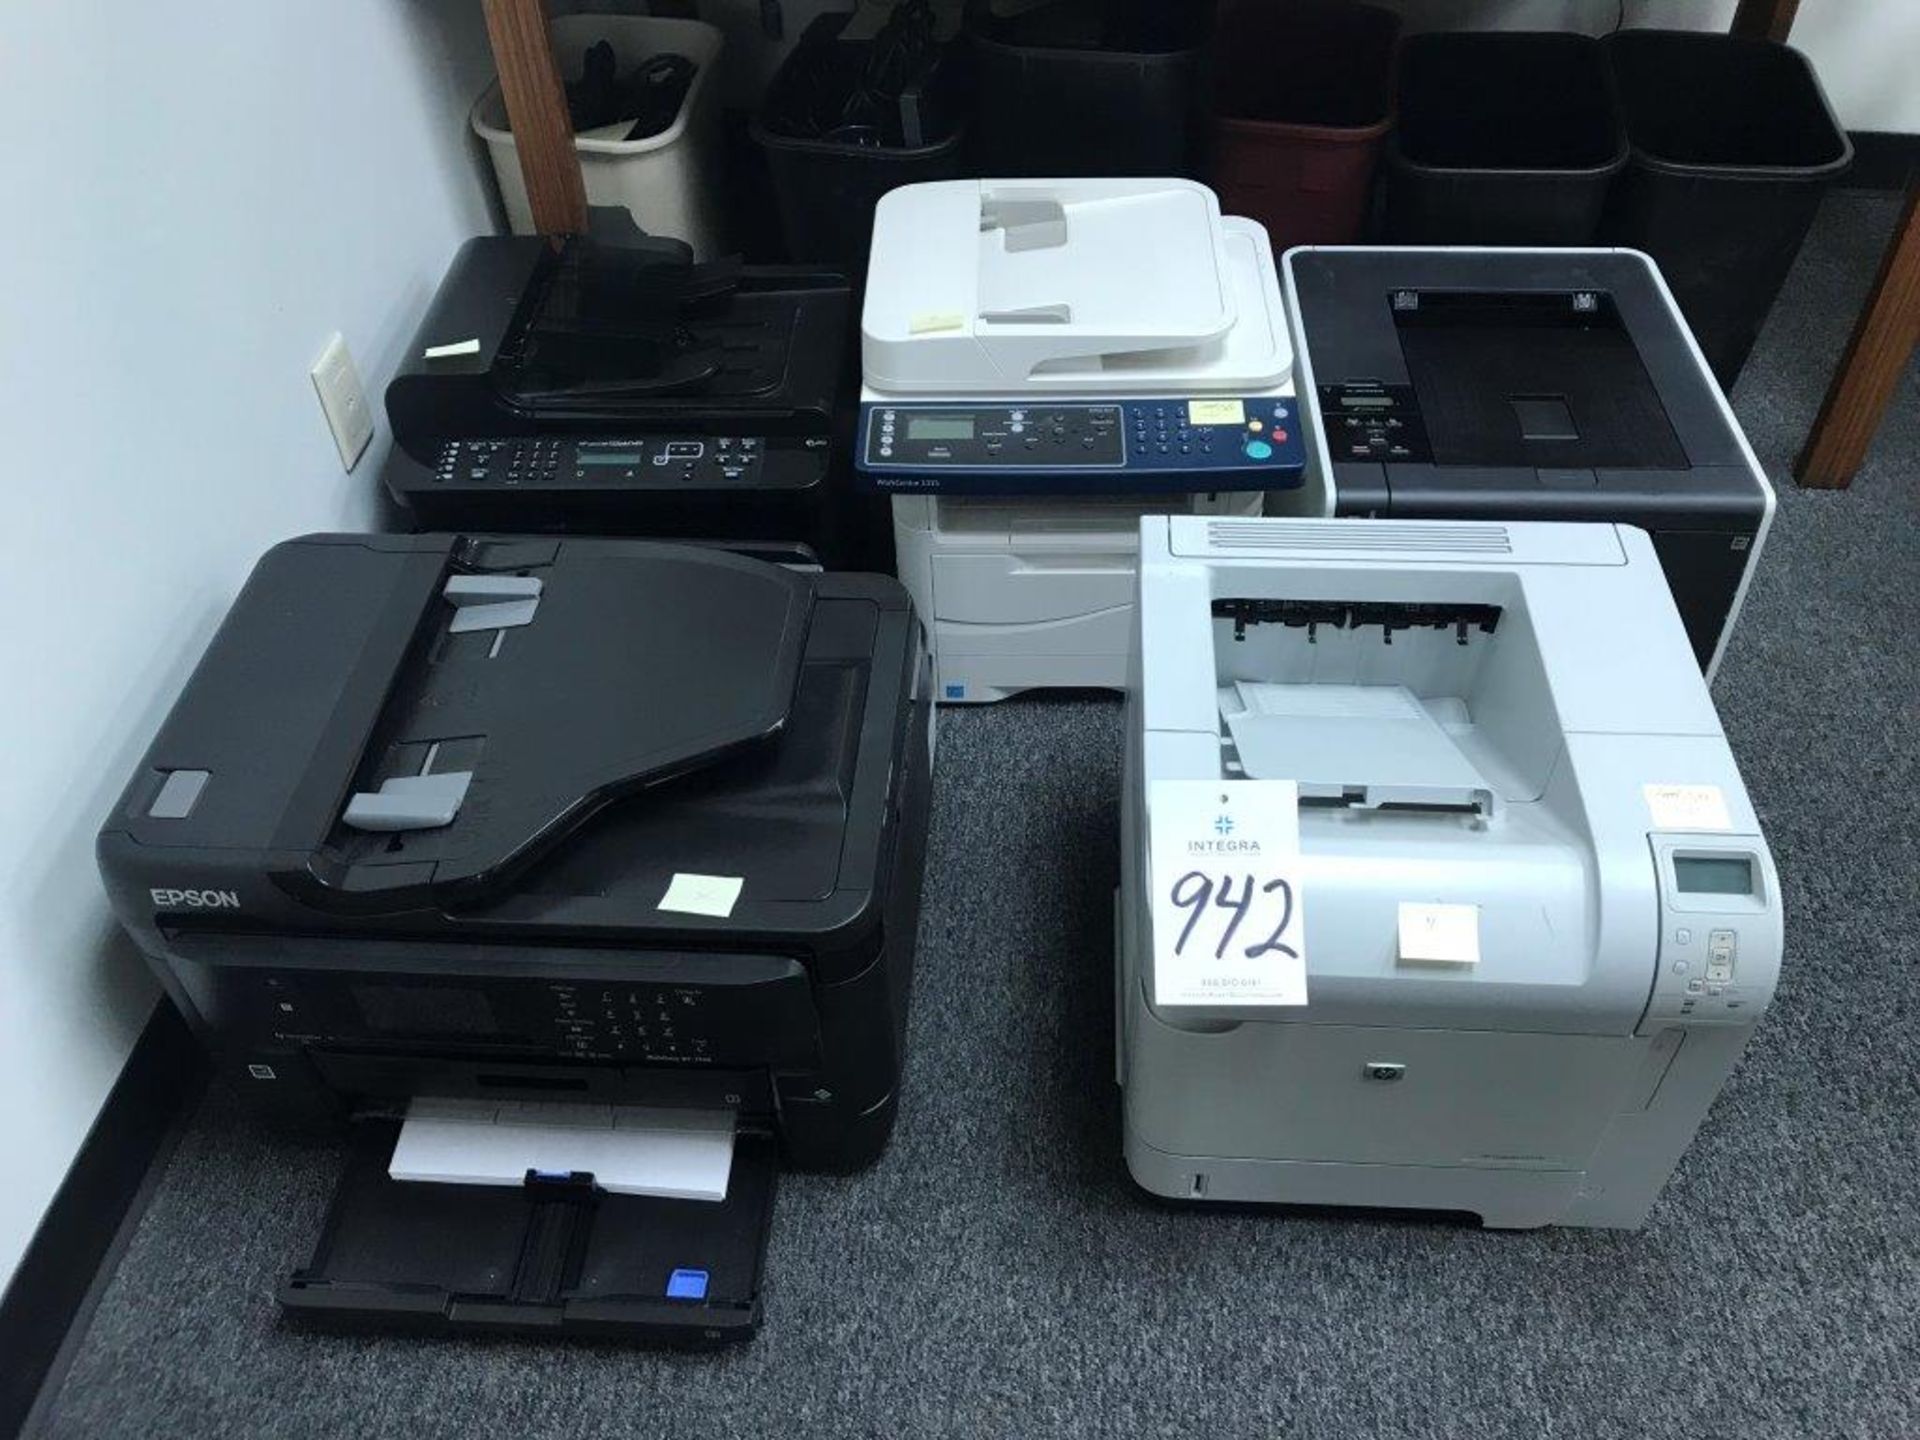 (5) Assorted Laser Jet Printers